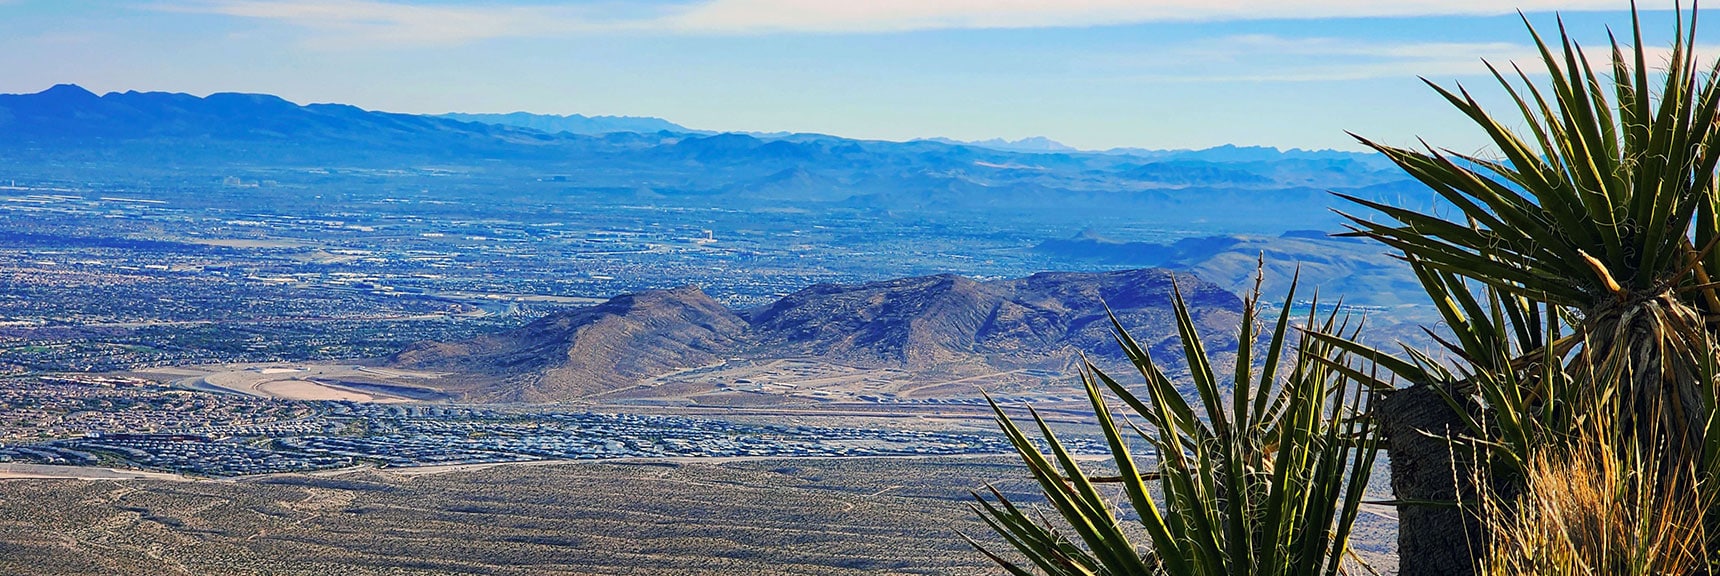 Vegas Summerlin Growth Edge. Entire Valley Below Will Be Filled | Damsel Peak Southeastern Slope | Calico & Brownstone Basins, Nevada